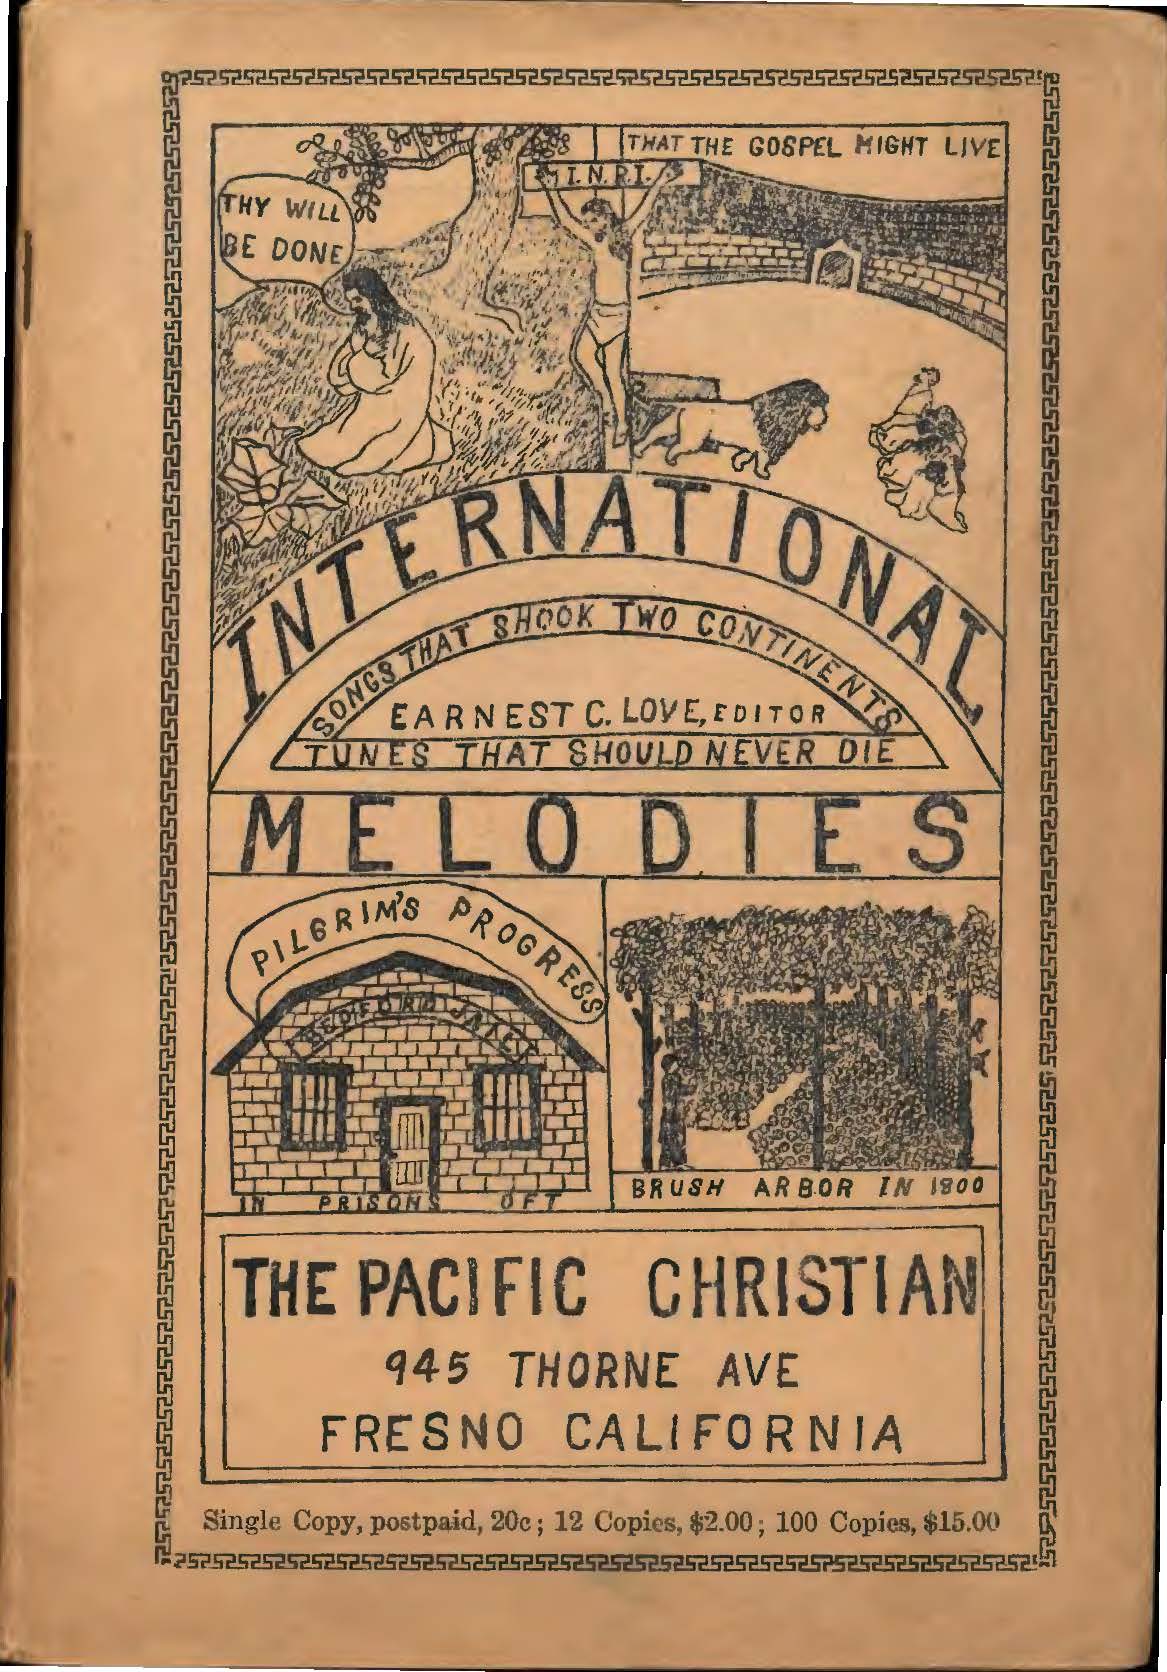 Earnest C. Love, International Melodies, 1924